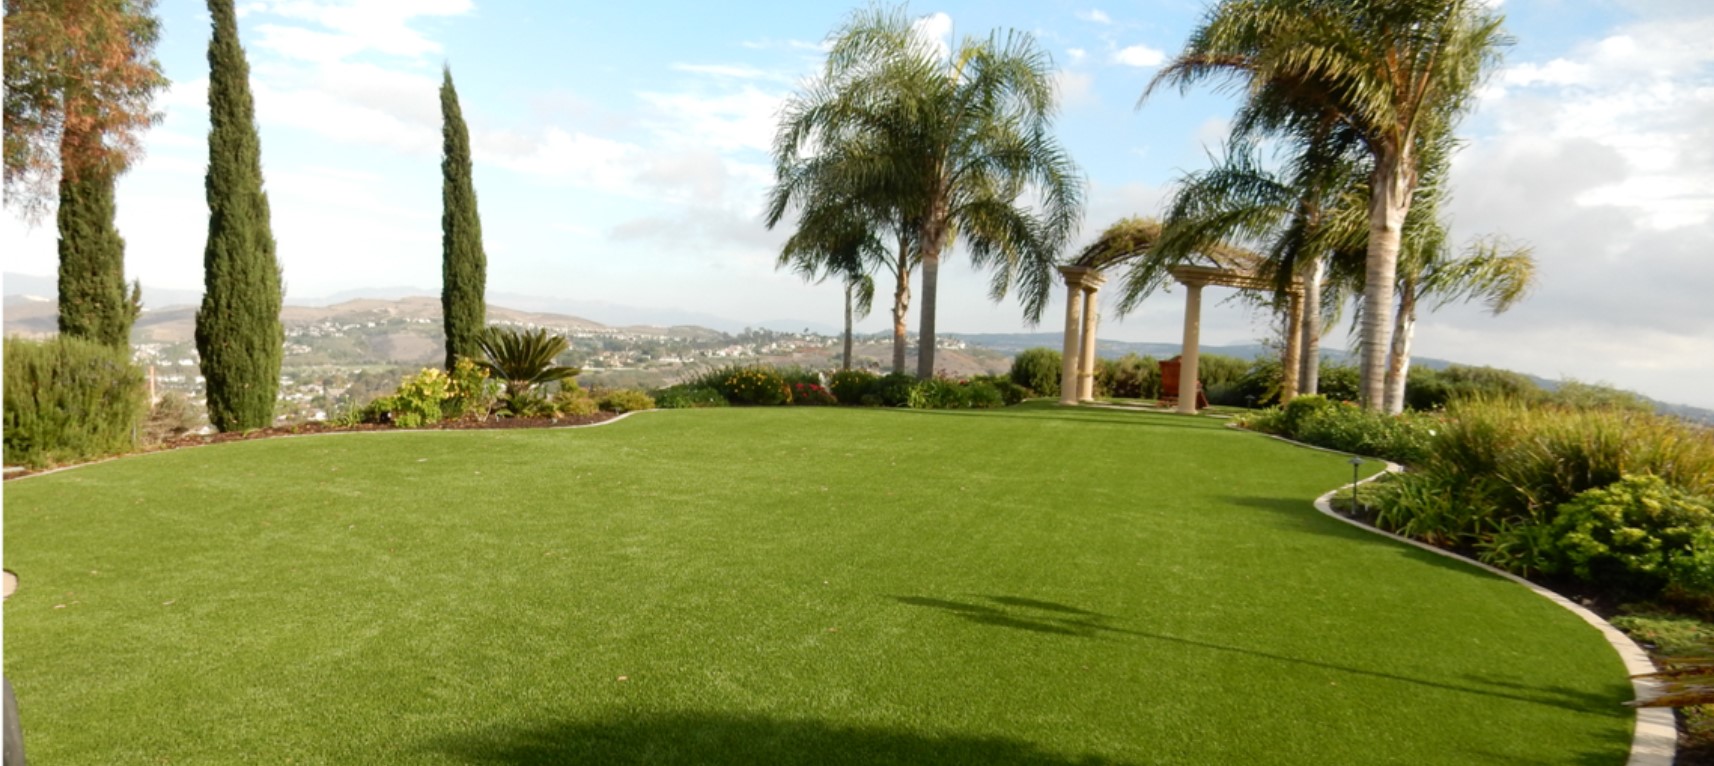 Residential Artificial Grass, Green-R Turf of Ventura, CA